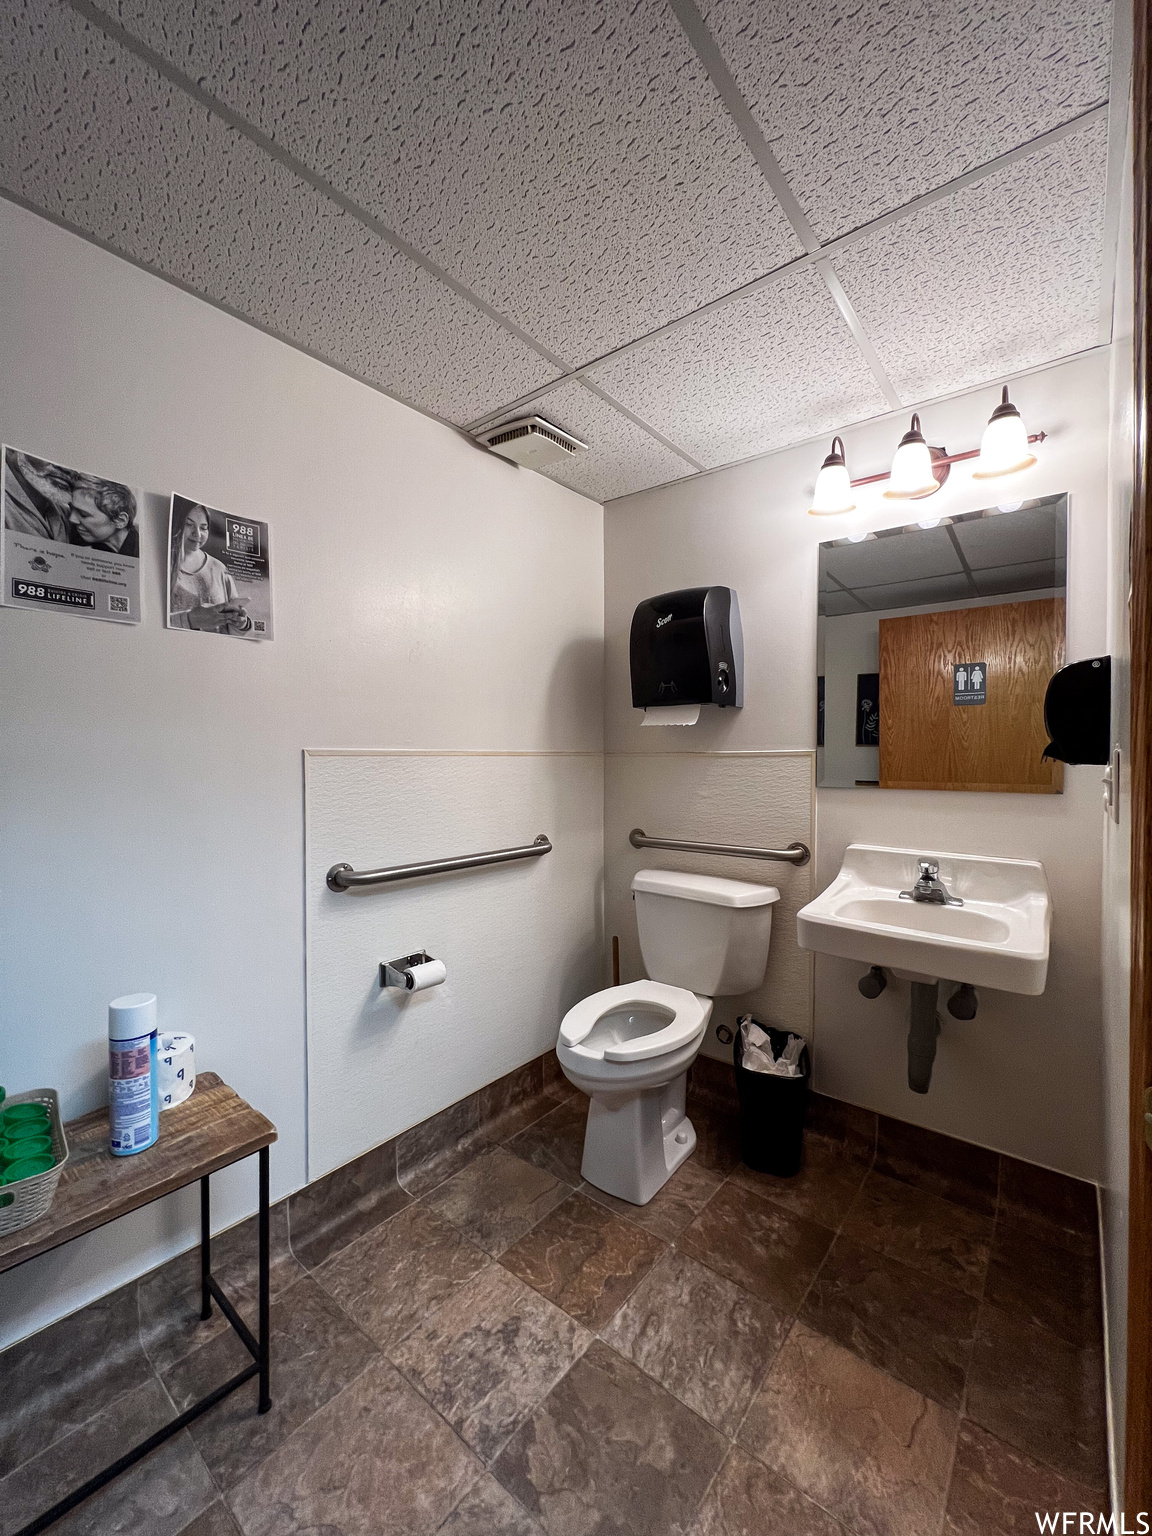 Bathroom featuring dark tile flooring, a drop ceiling, mirror, and washbasin